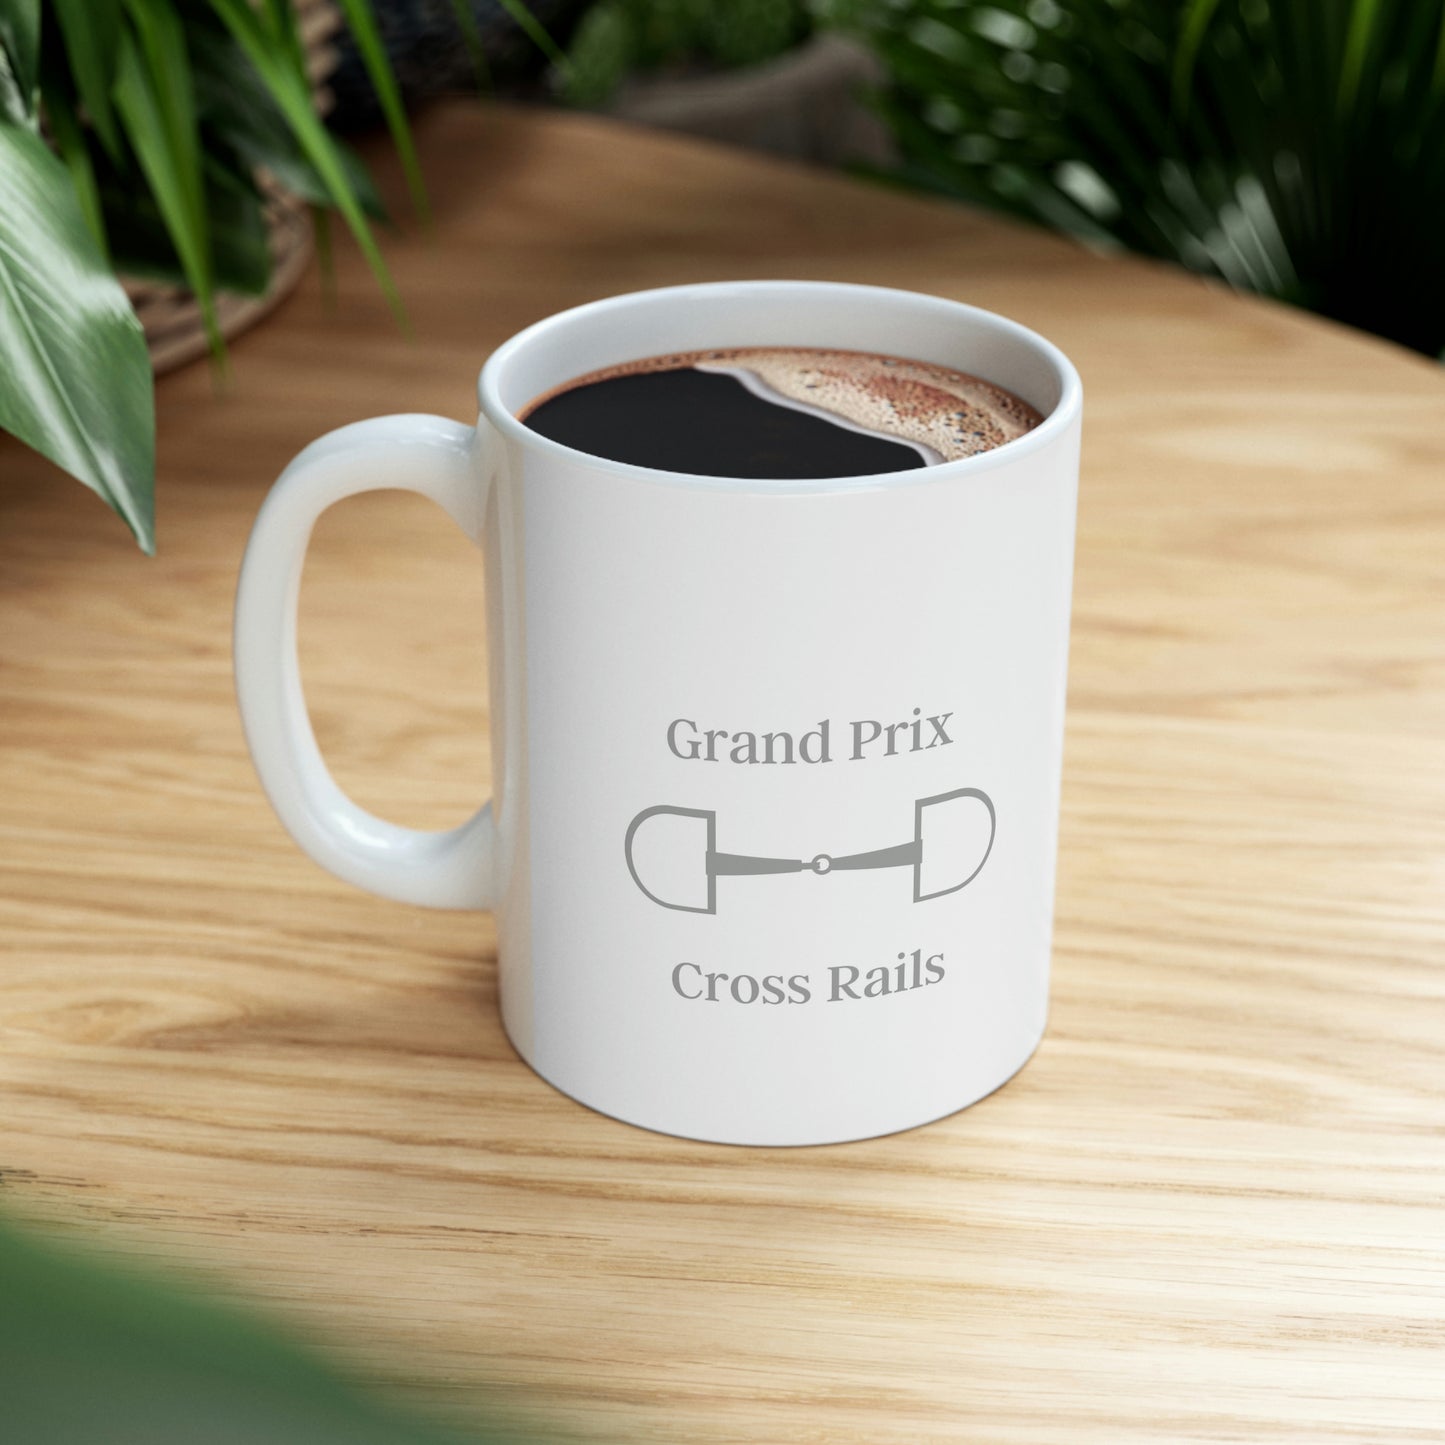 Grand Prix Cross Rails - Ceramic Mug 11oz